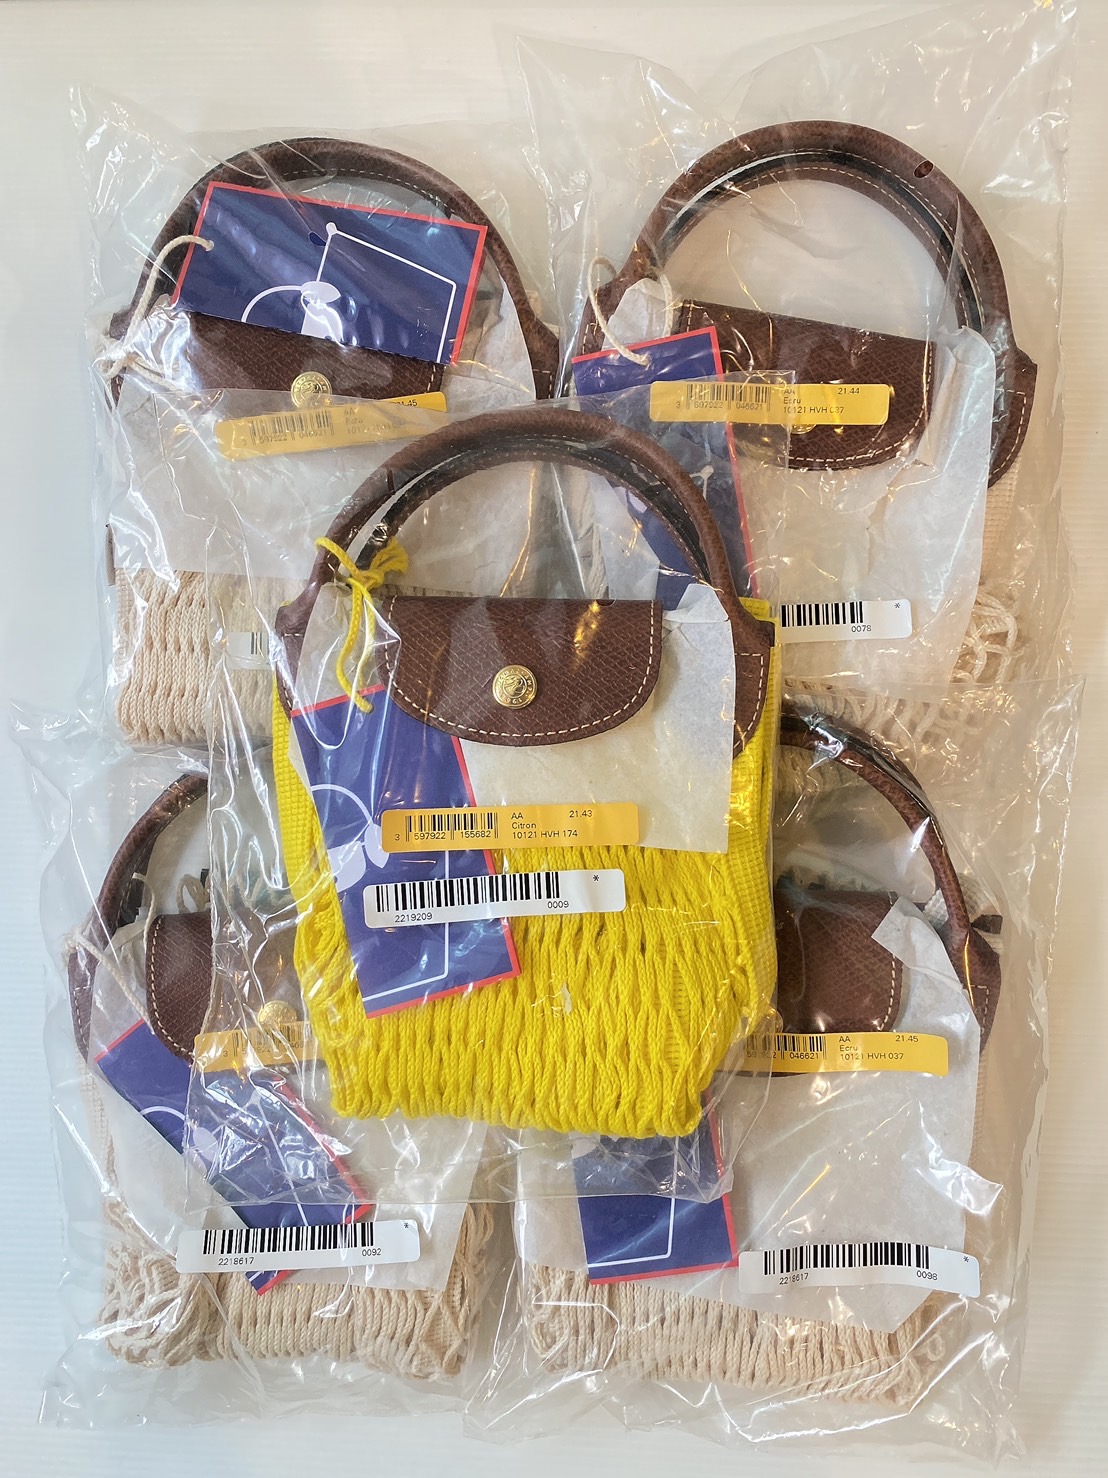 FREE SCARF] Longchamp Le Pliage Filet Handle Bag - Yellow, Barang Mewah,  Tas & Dompet di Carousell